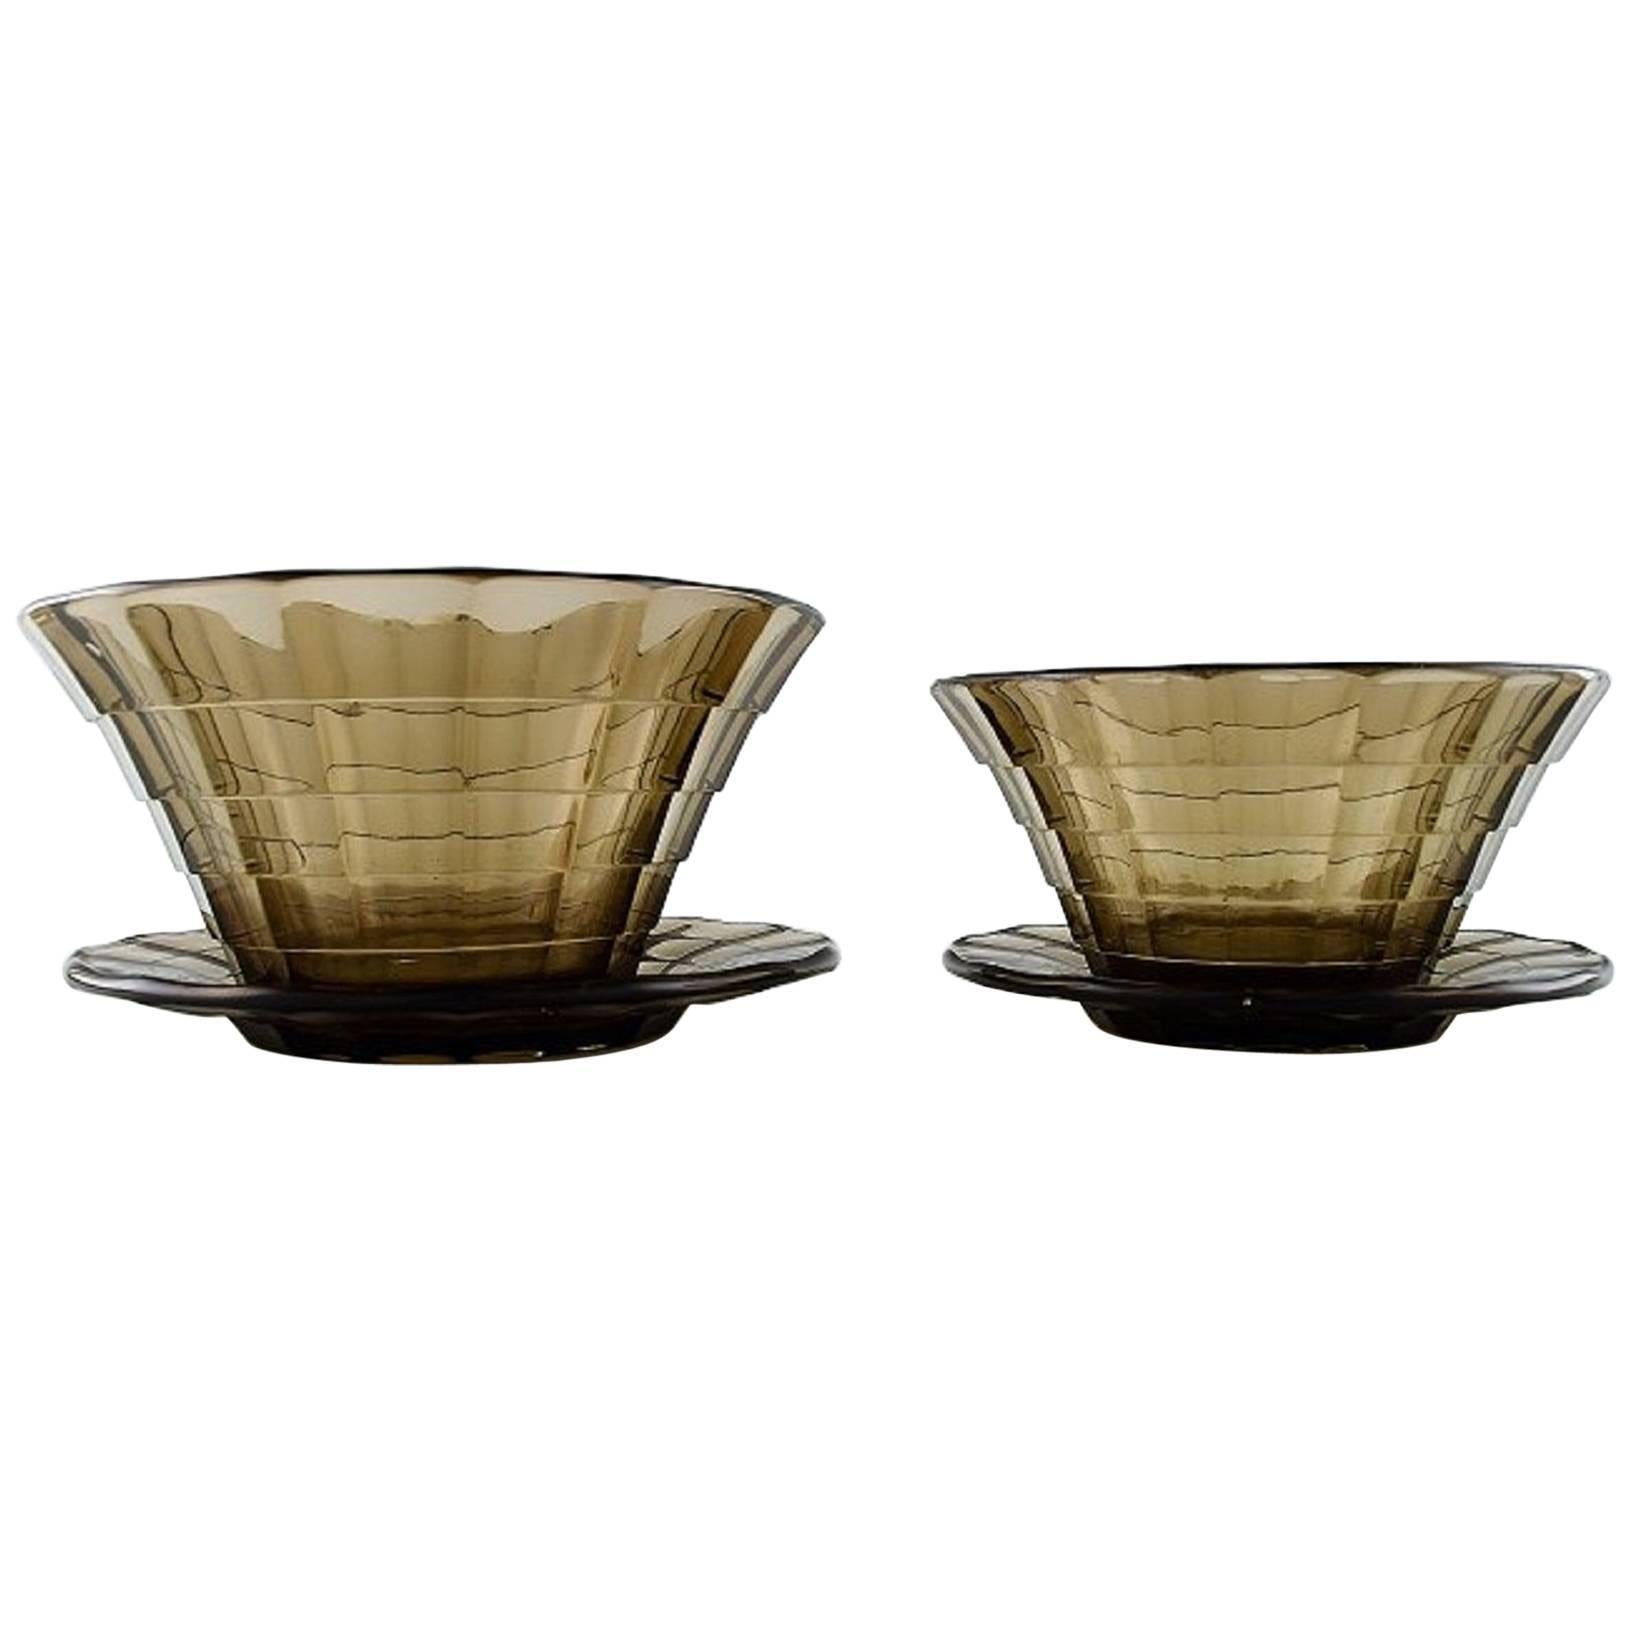 2 Art deco bowls. Simon Gate for Orrefors/Sandvik. Topaz coloured bowls For Sale